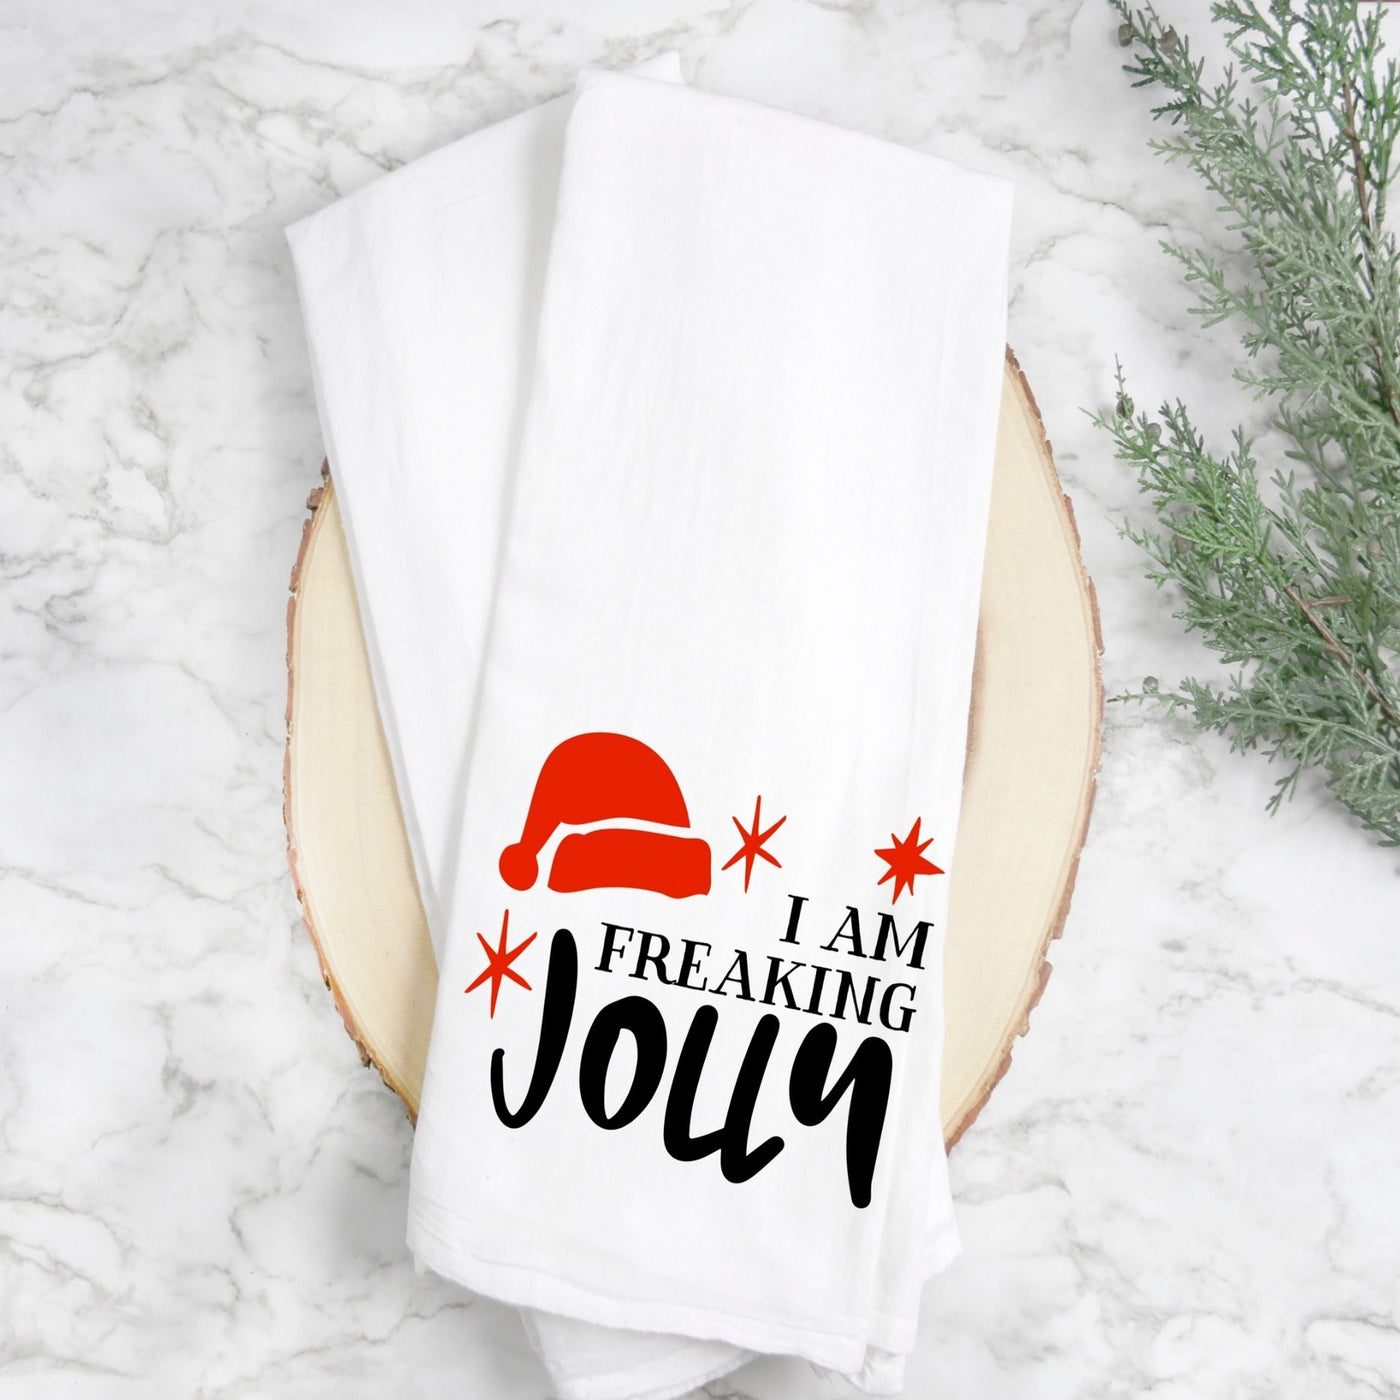 I am freaking jolly - humorous holiday kitchen bar towel